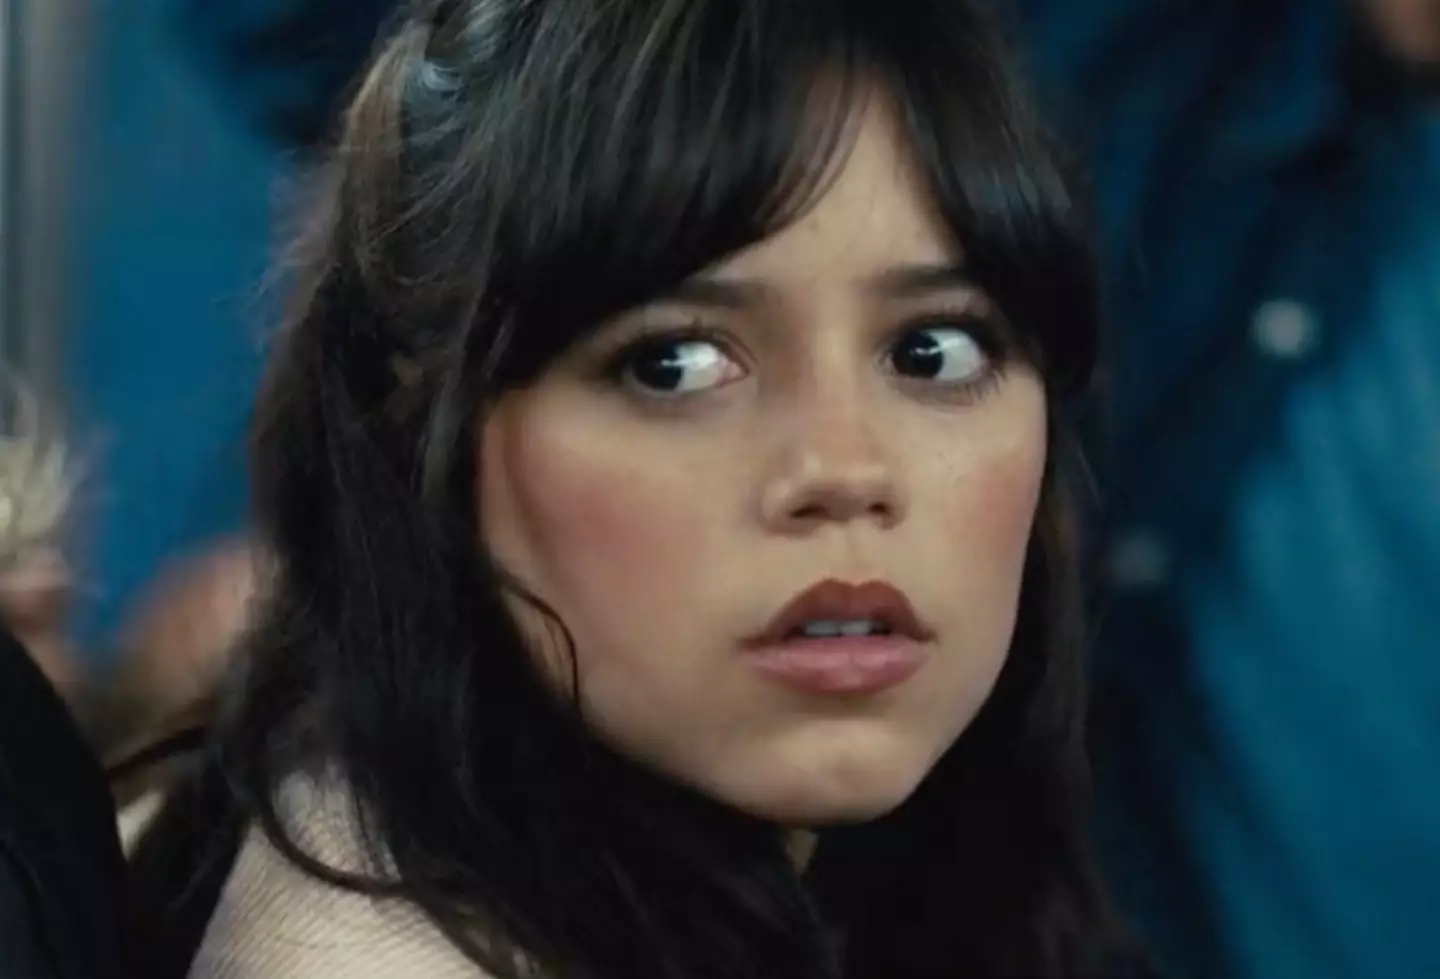 Jenna Ortega makes a return in the film.